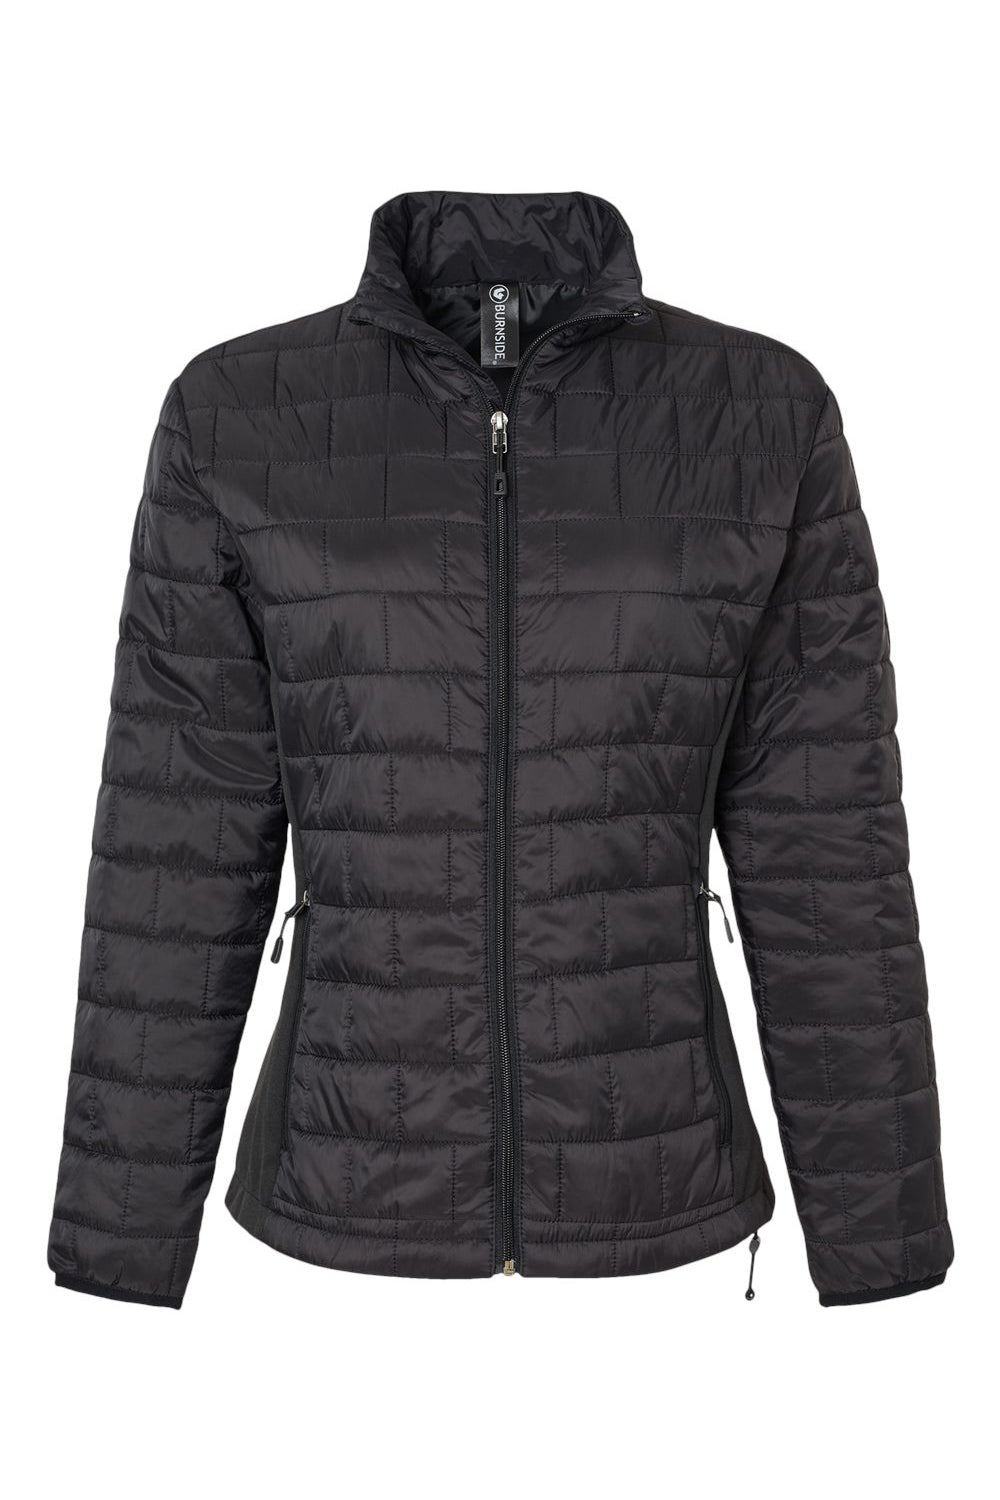 Burnside 5713 Womens Element Full Zip Puffer Jacket Black Flat Front